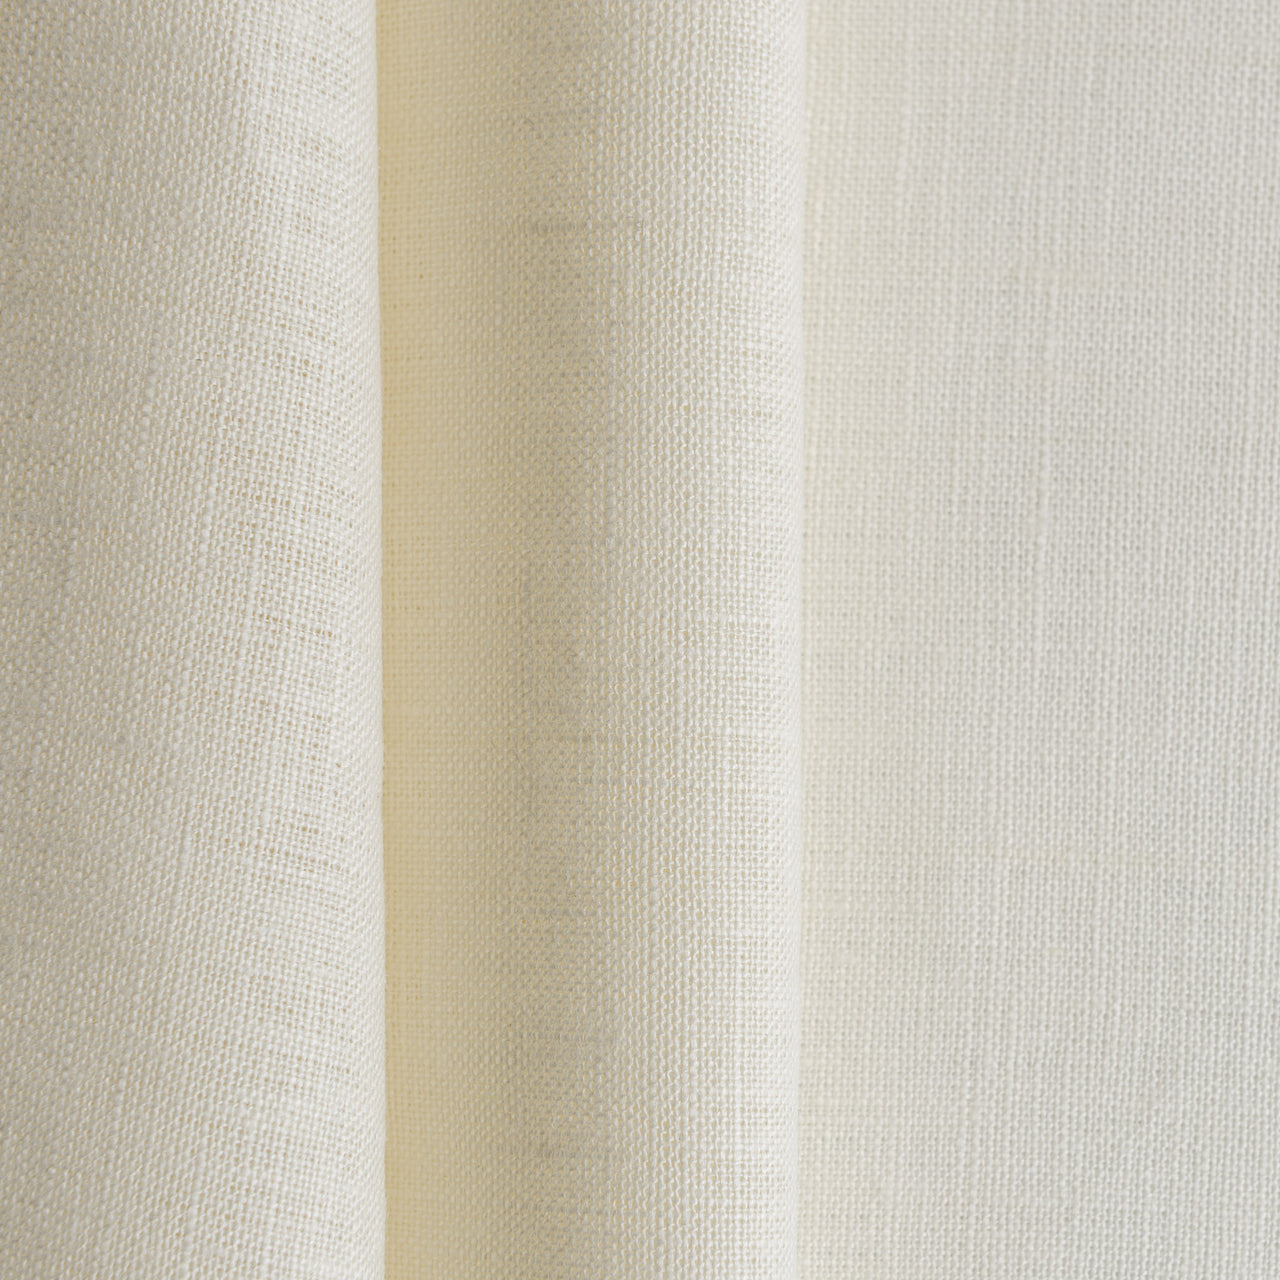 Eyelet Cream Linen Curtain Panel - Grommet Curtains